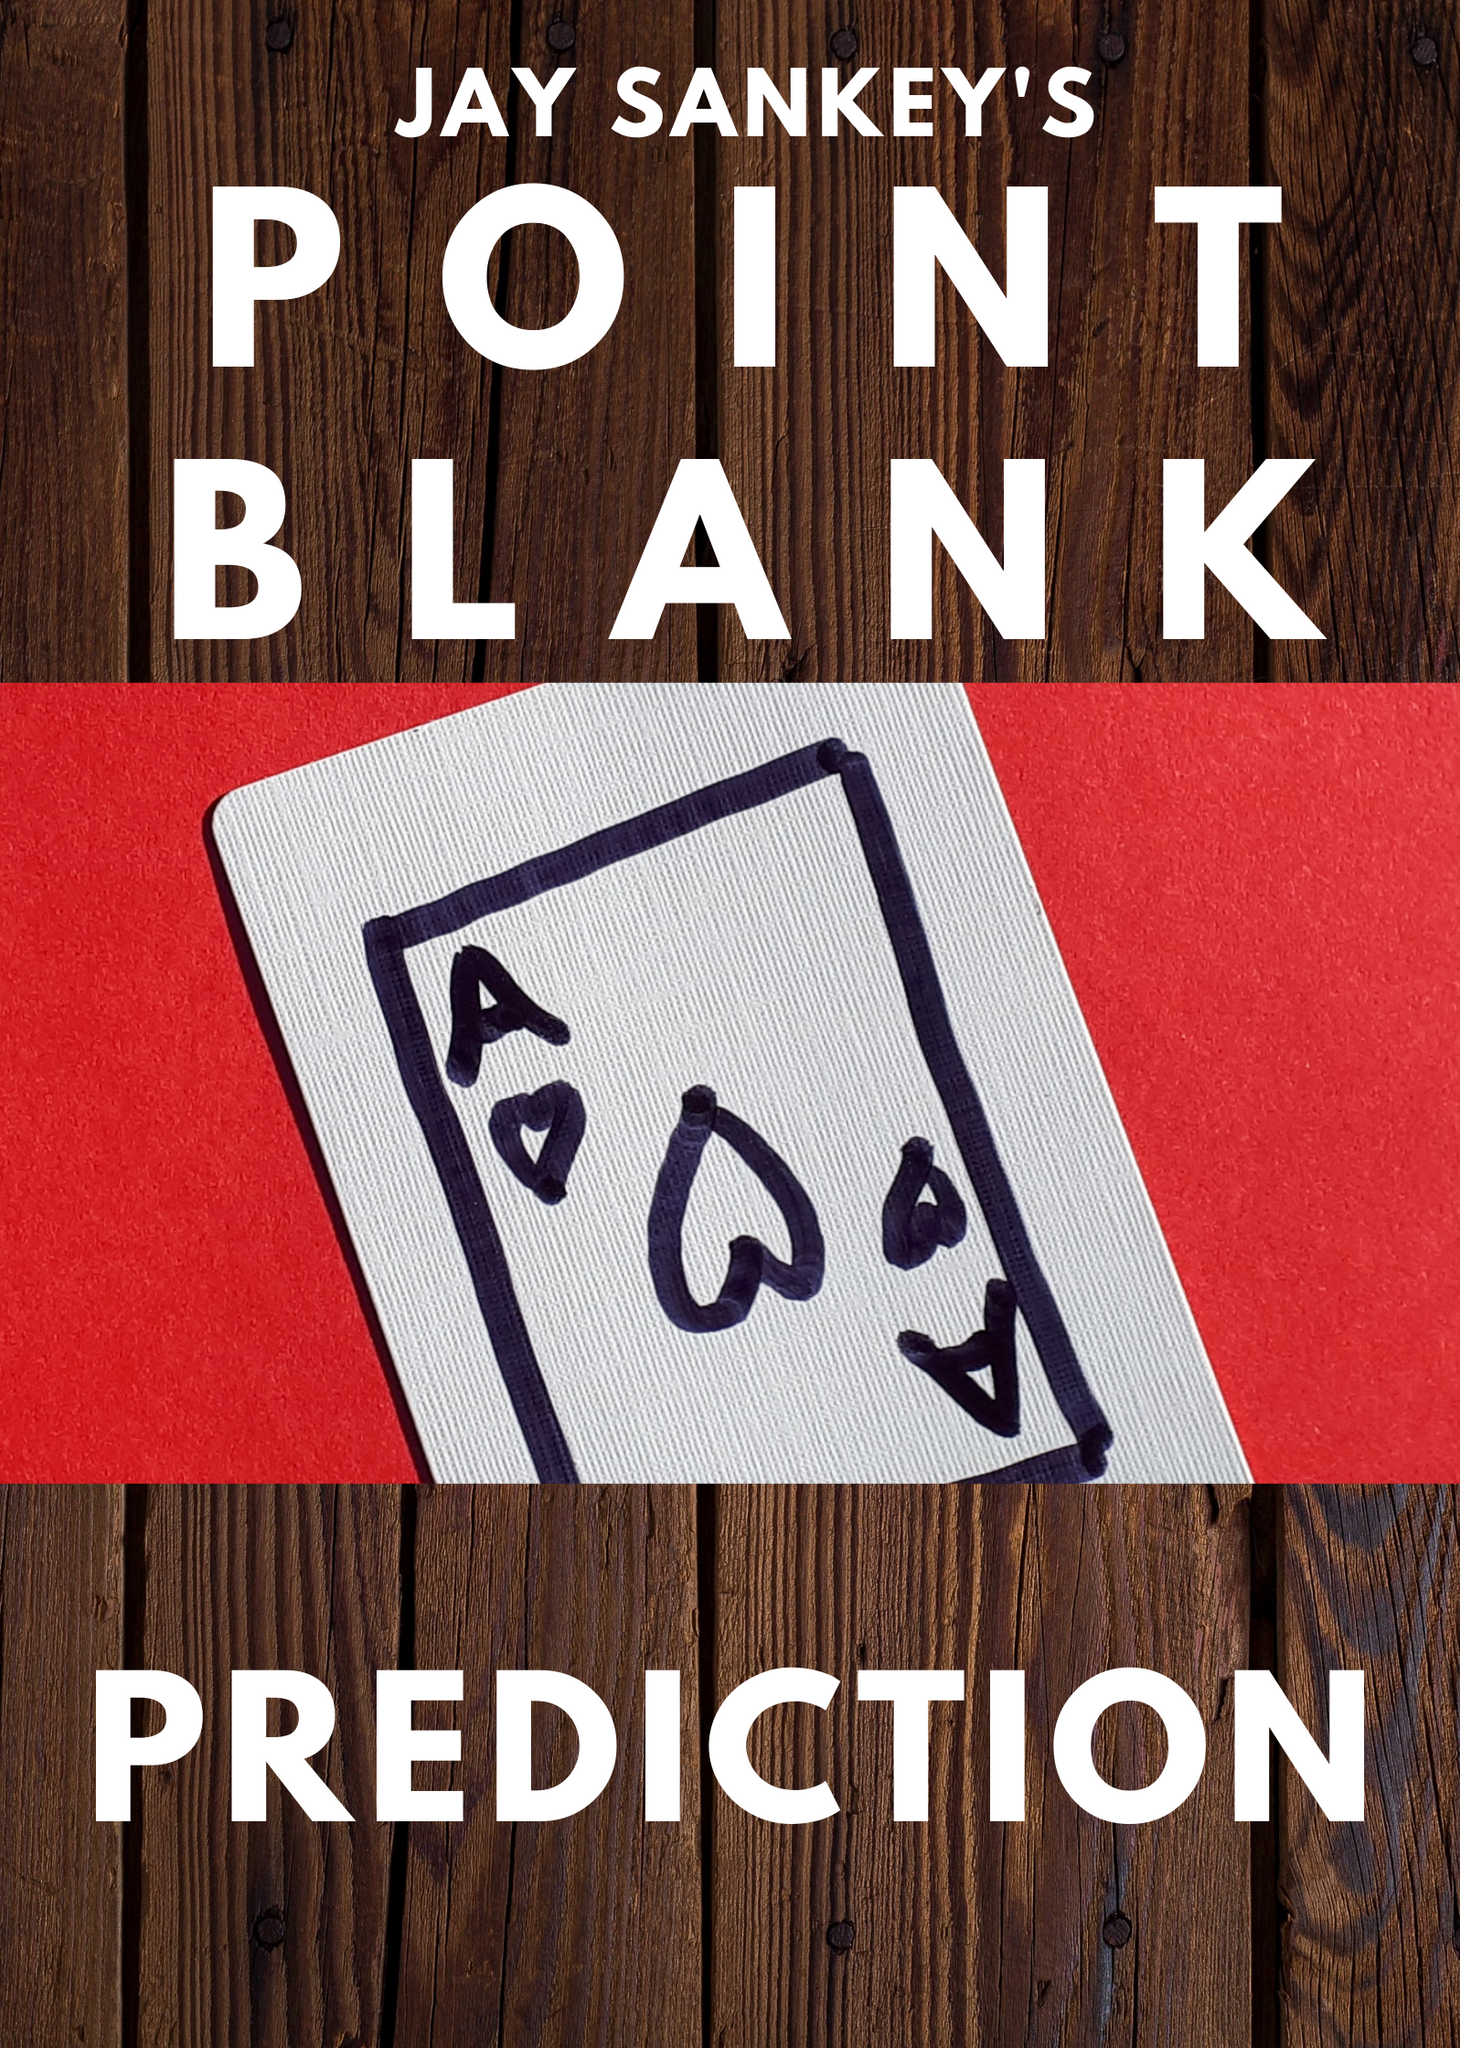 POINT BLANK PREDICTION